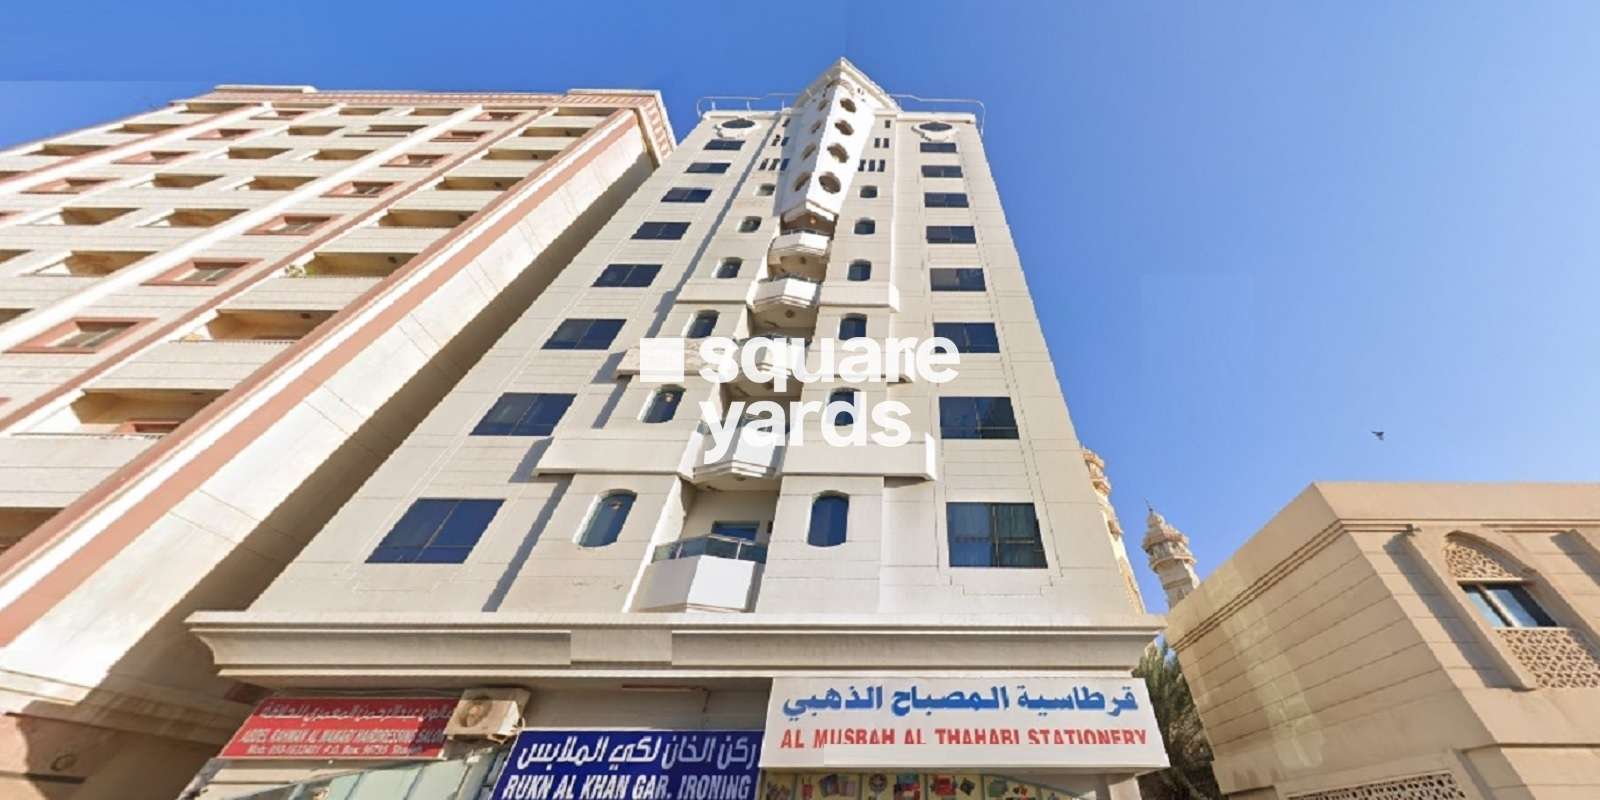 Al Wesba Building Cover Image